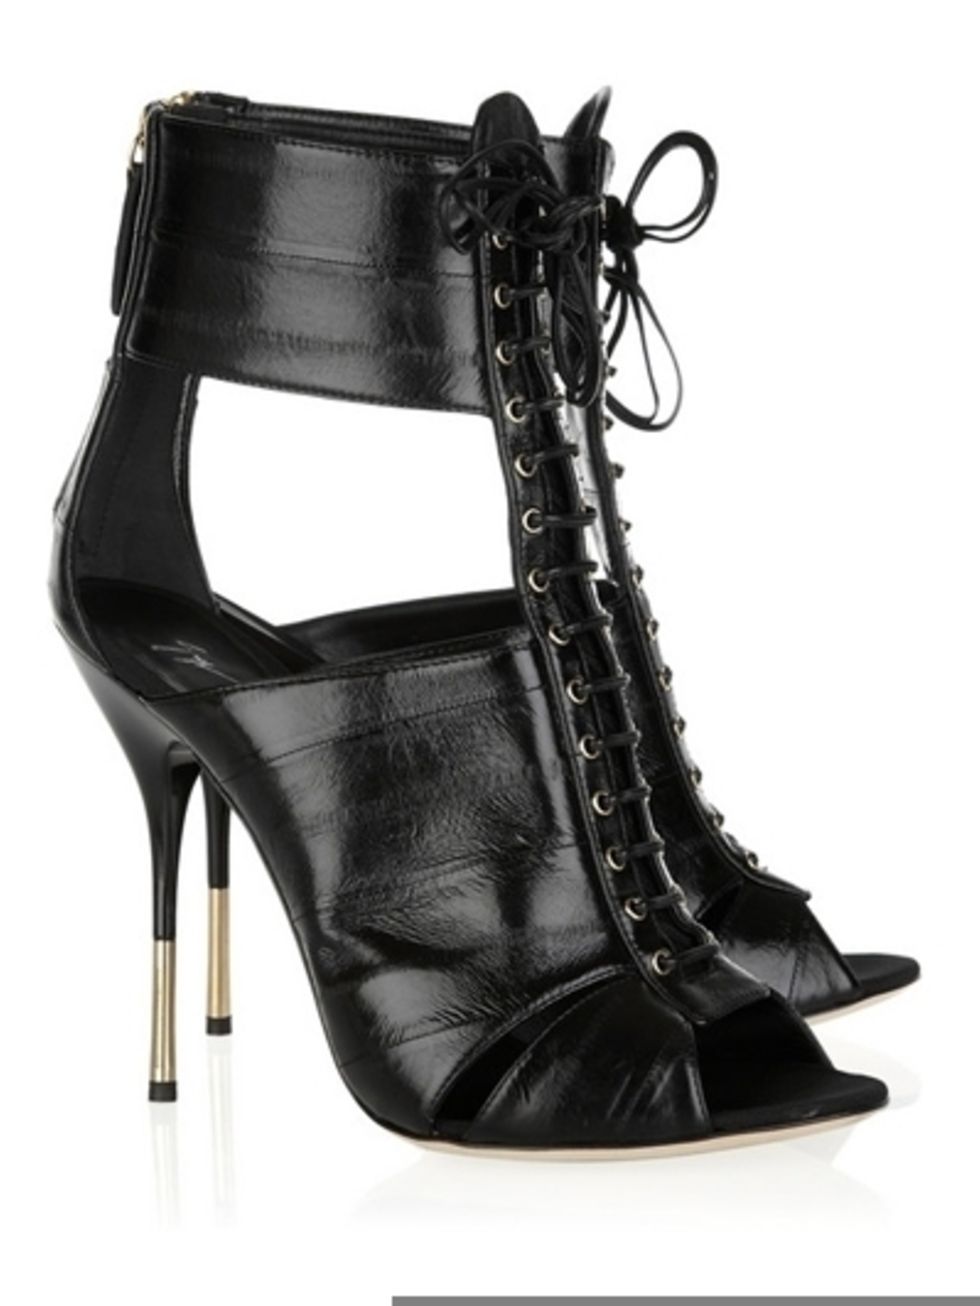 Footwear, Product, High heels, Boot, Fashion, Black, Leather, Sandal, Basic pump, Fashion design, 